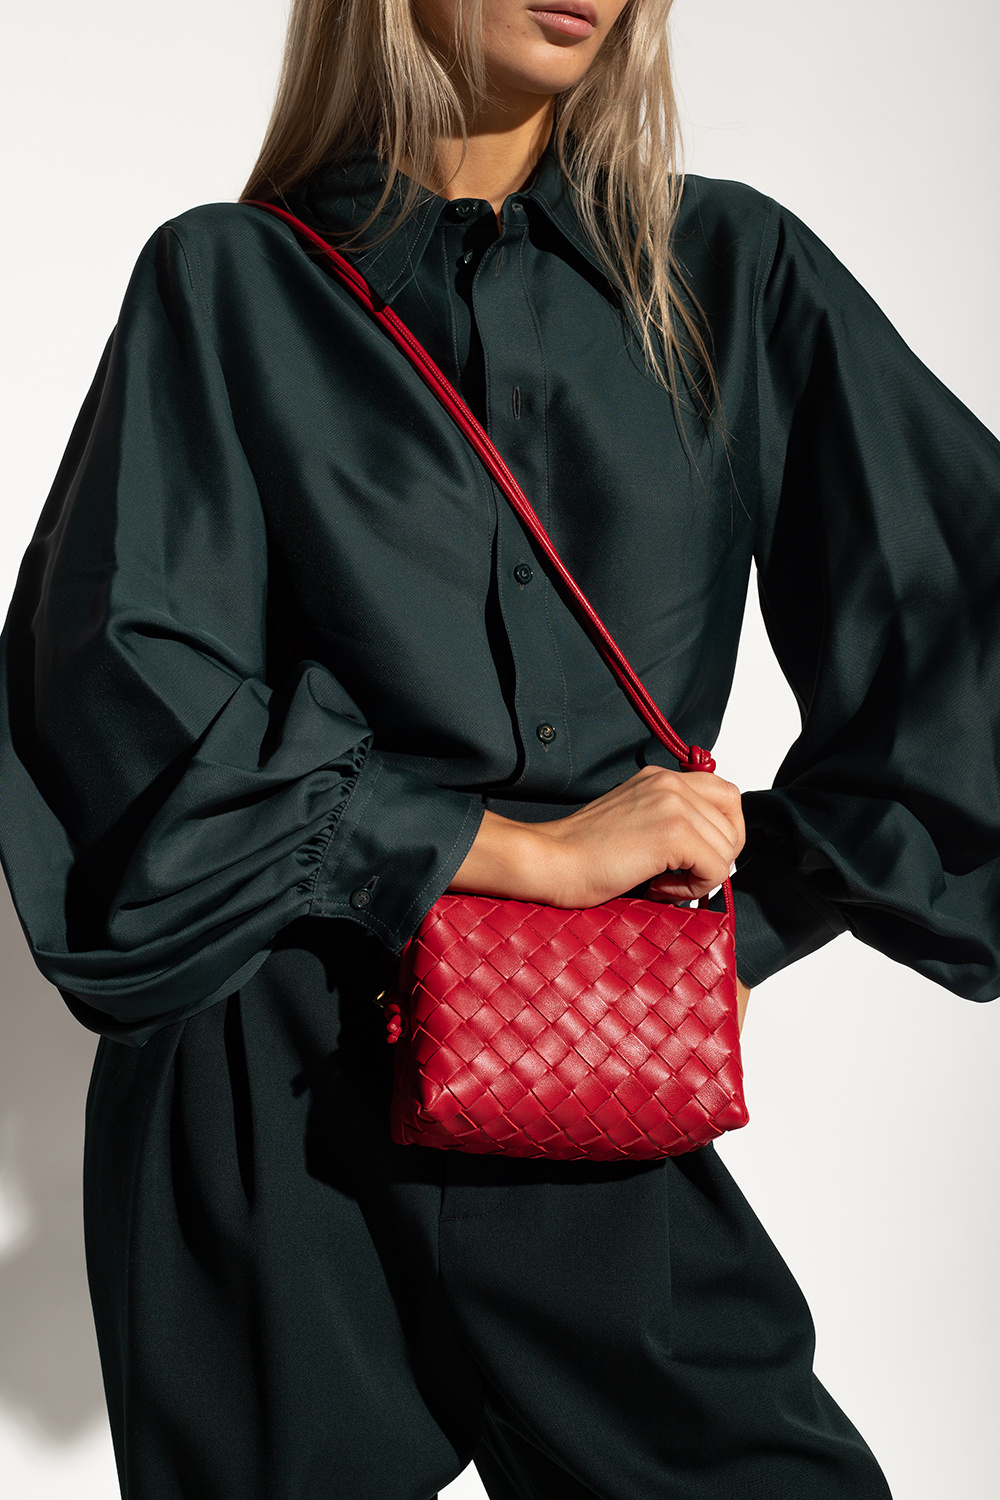 Loop mini leather shoulder bag by Bottega Veneta